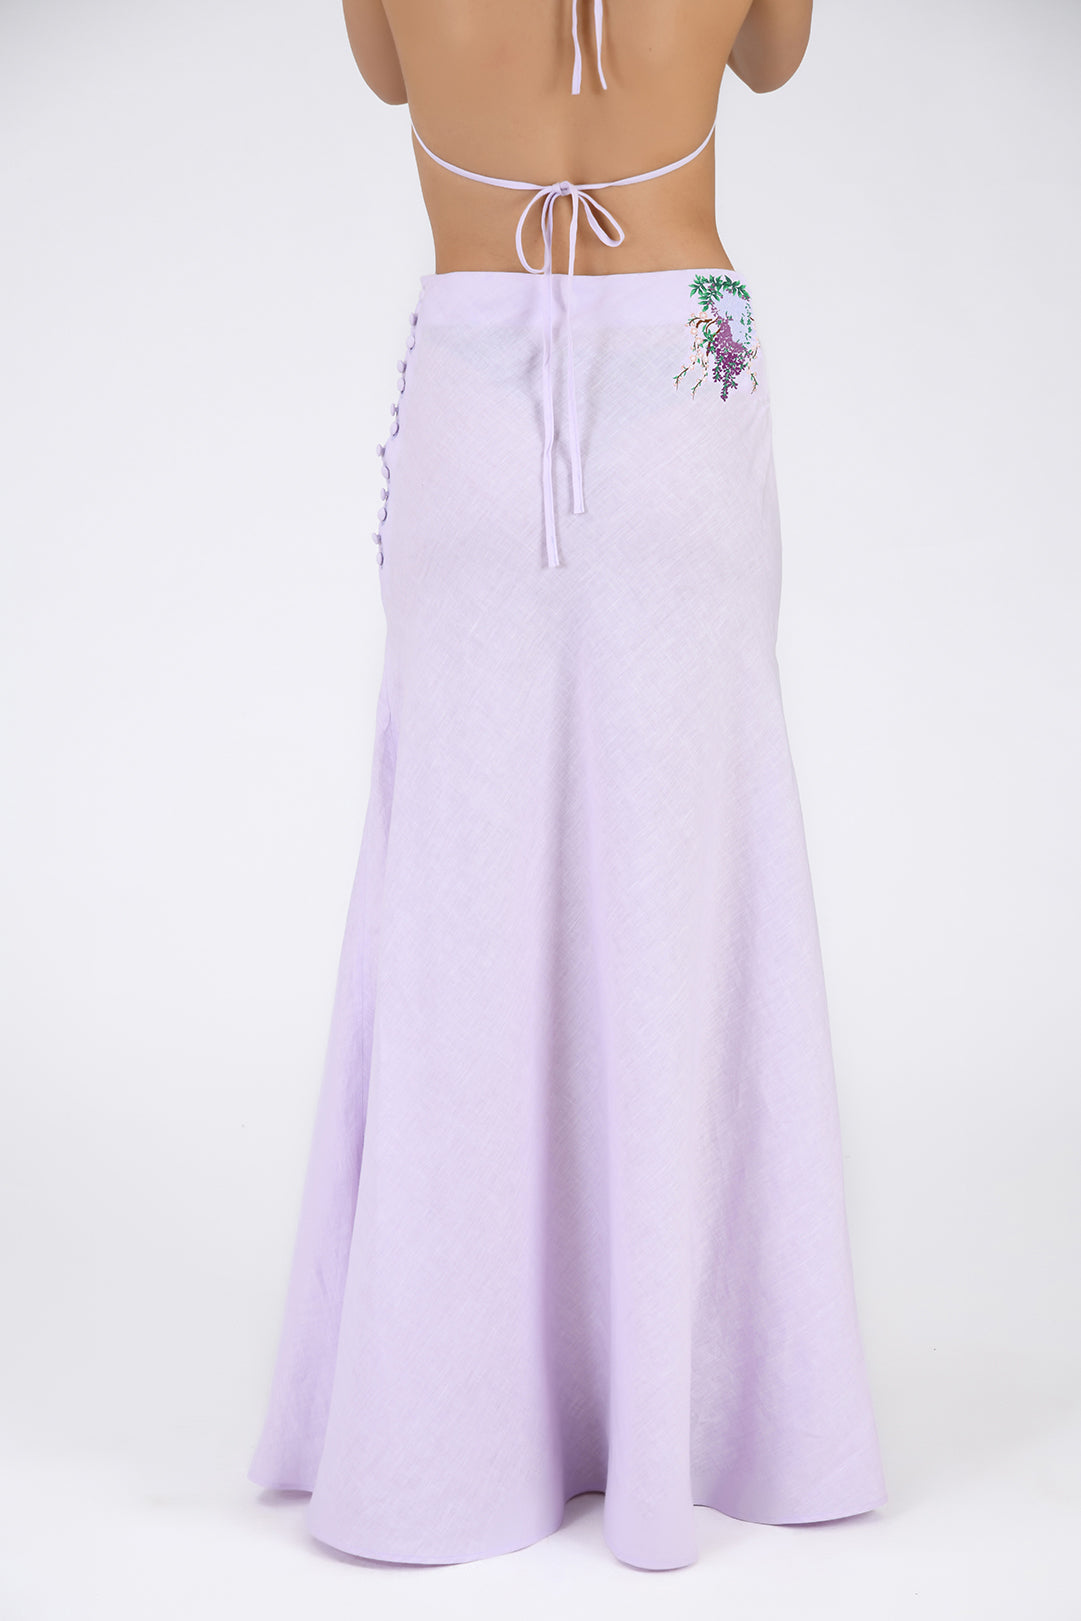 Simbi Sako Skirt Set Back VIew